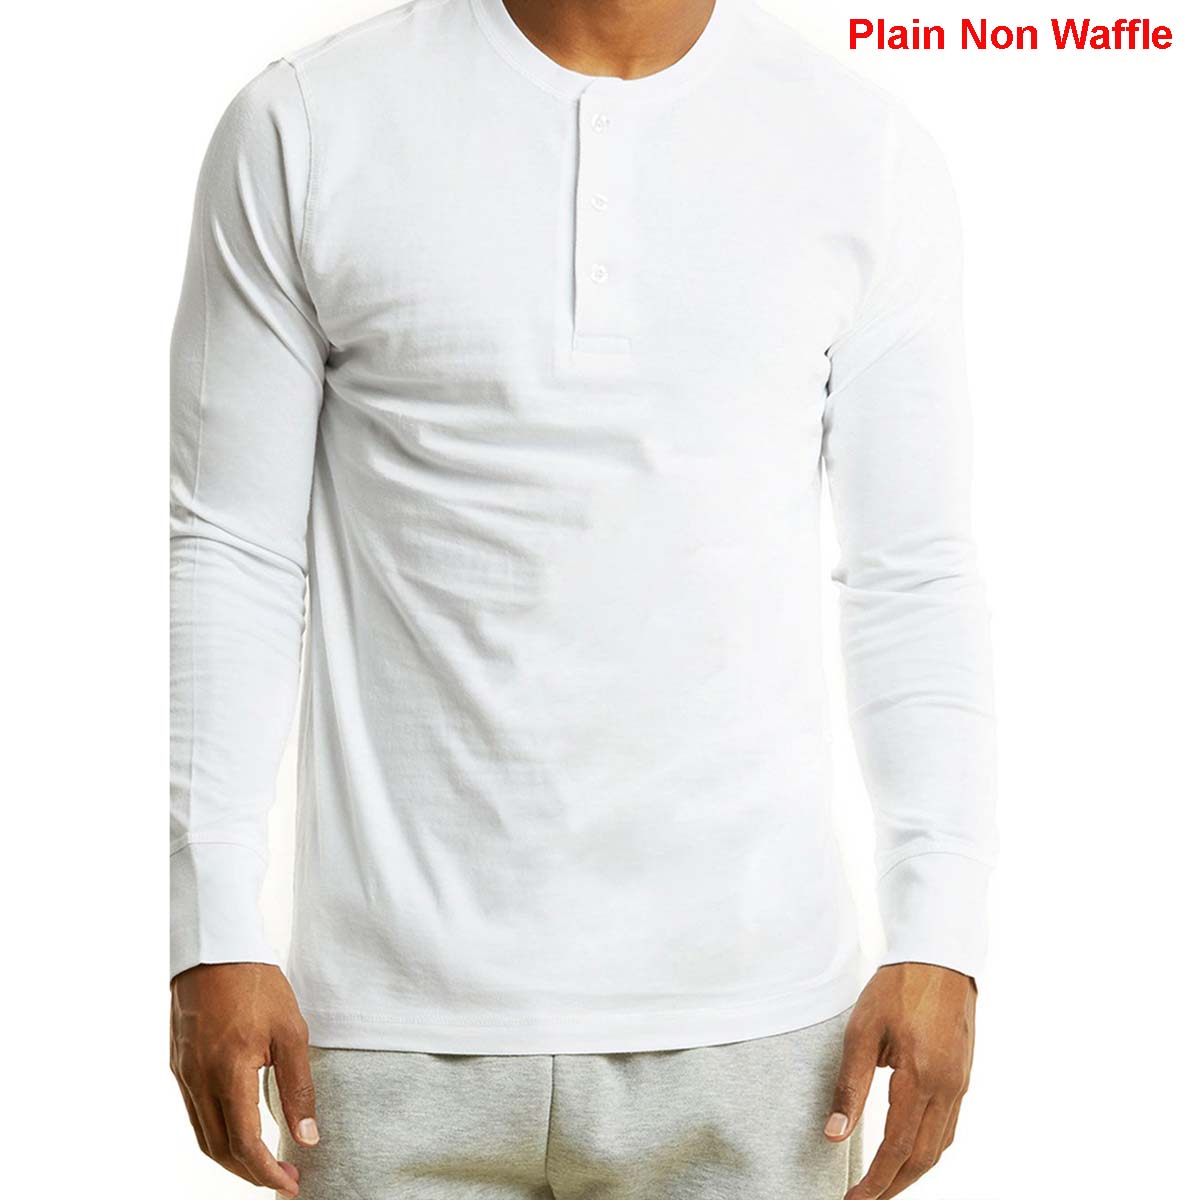 Knocker Mens 100% Cotton Thermal Top Waffle Knit Henley Undershirt